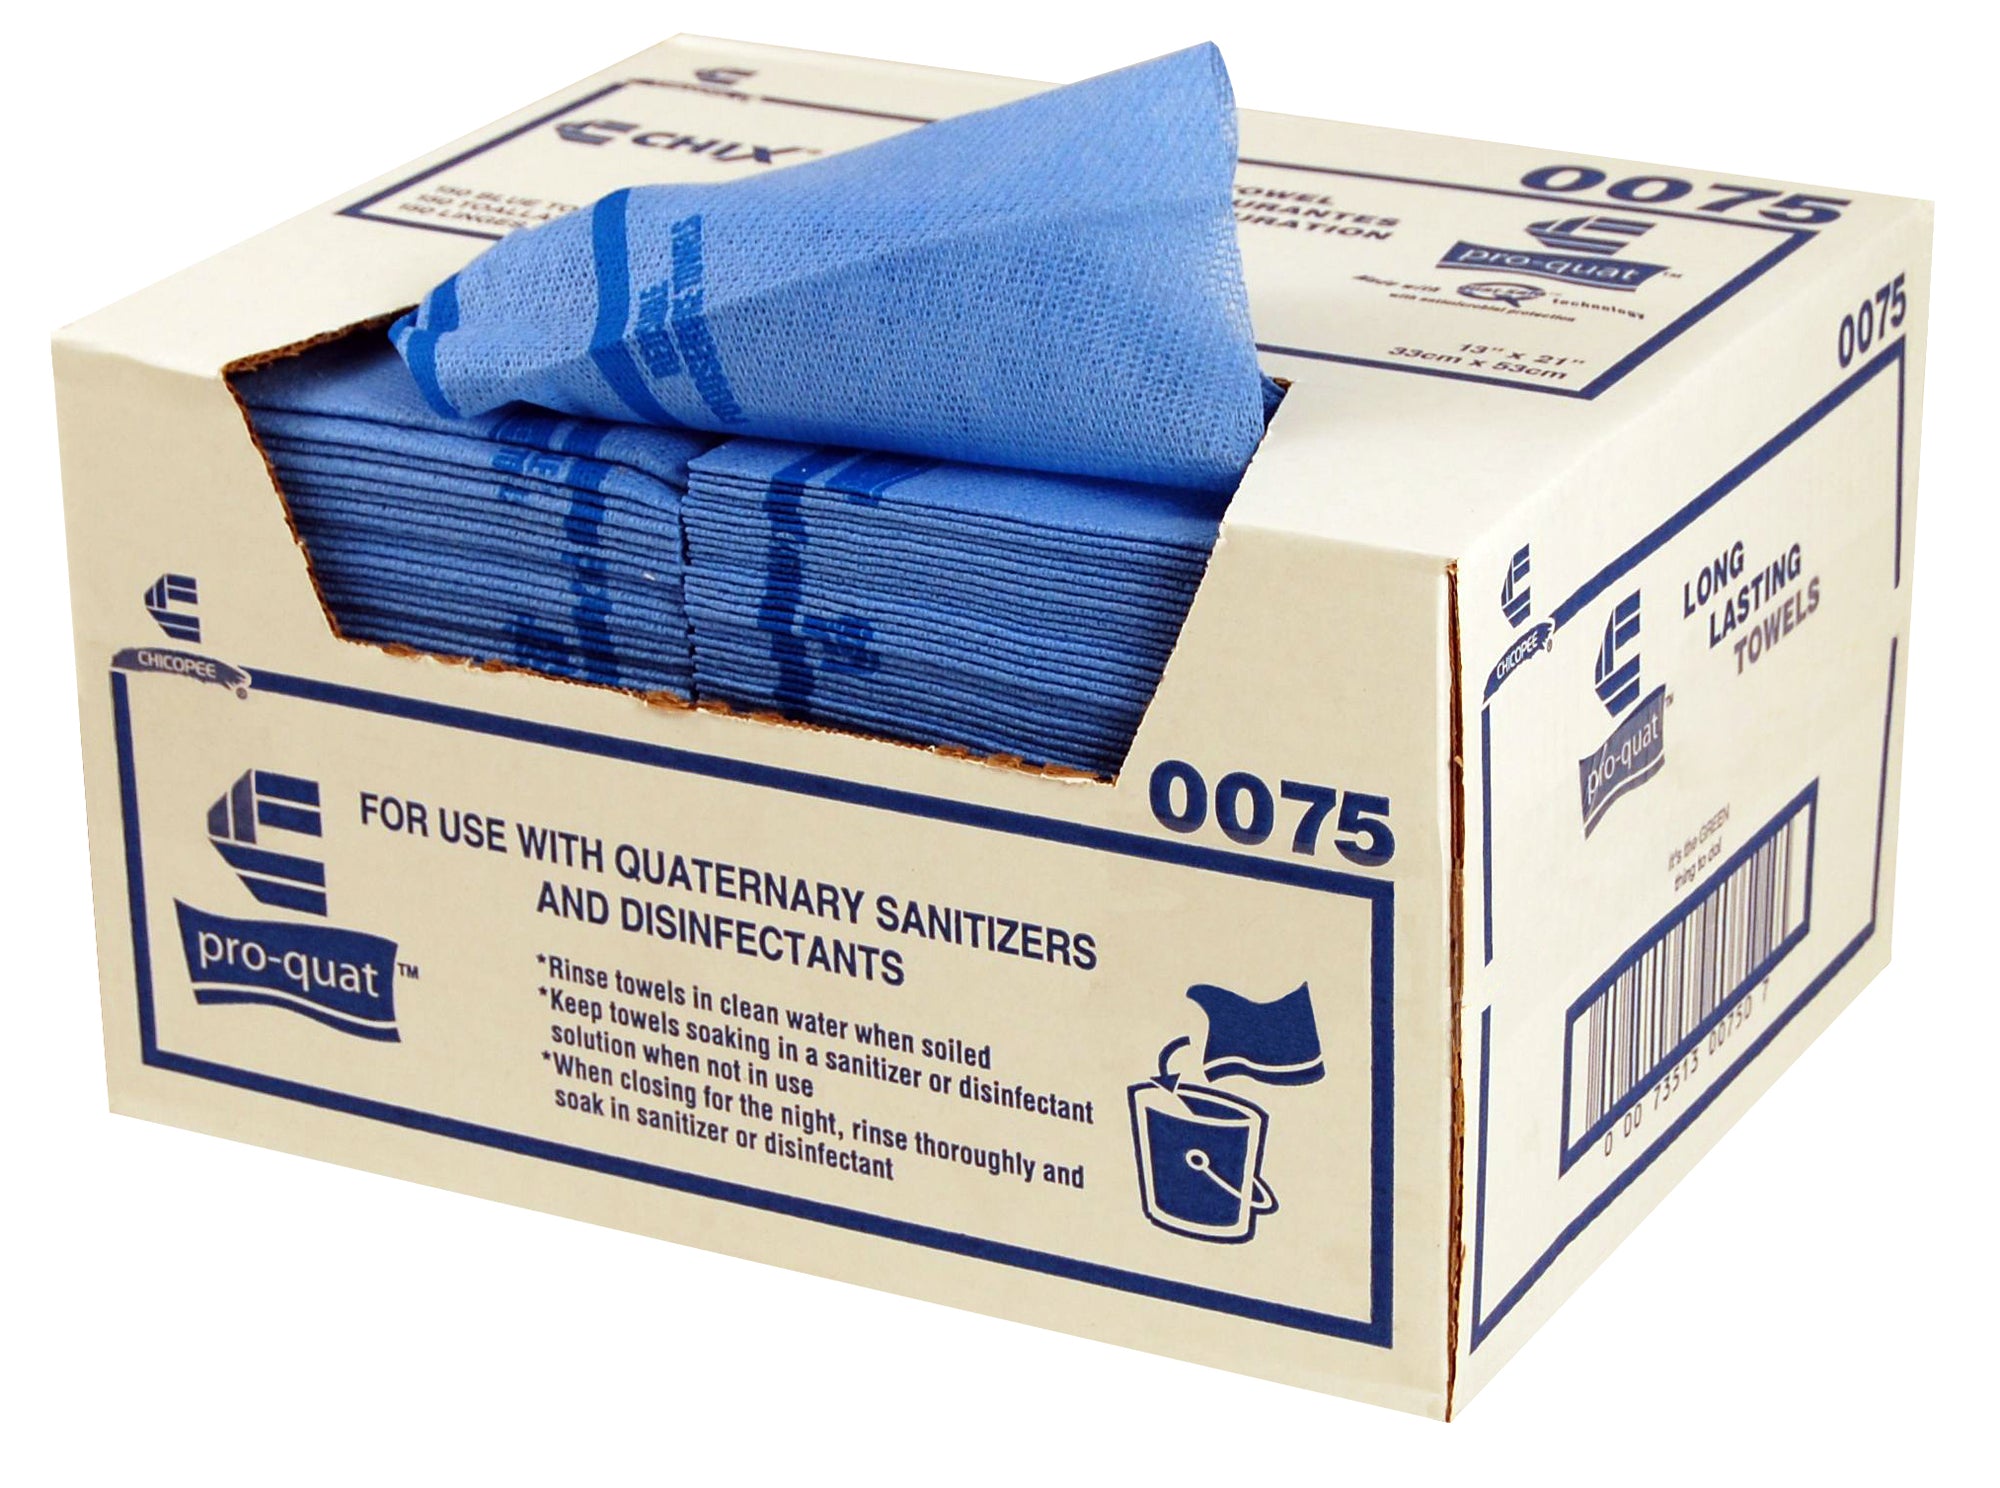 0075, Chix(R) Pro-Quat Foodservice Towel, W/ microban, Blue w/ blue print, med-hvy duty, 13?x21?